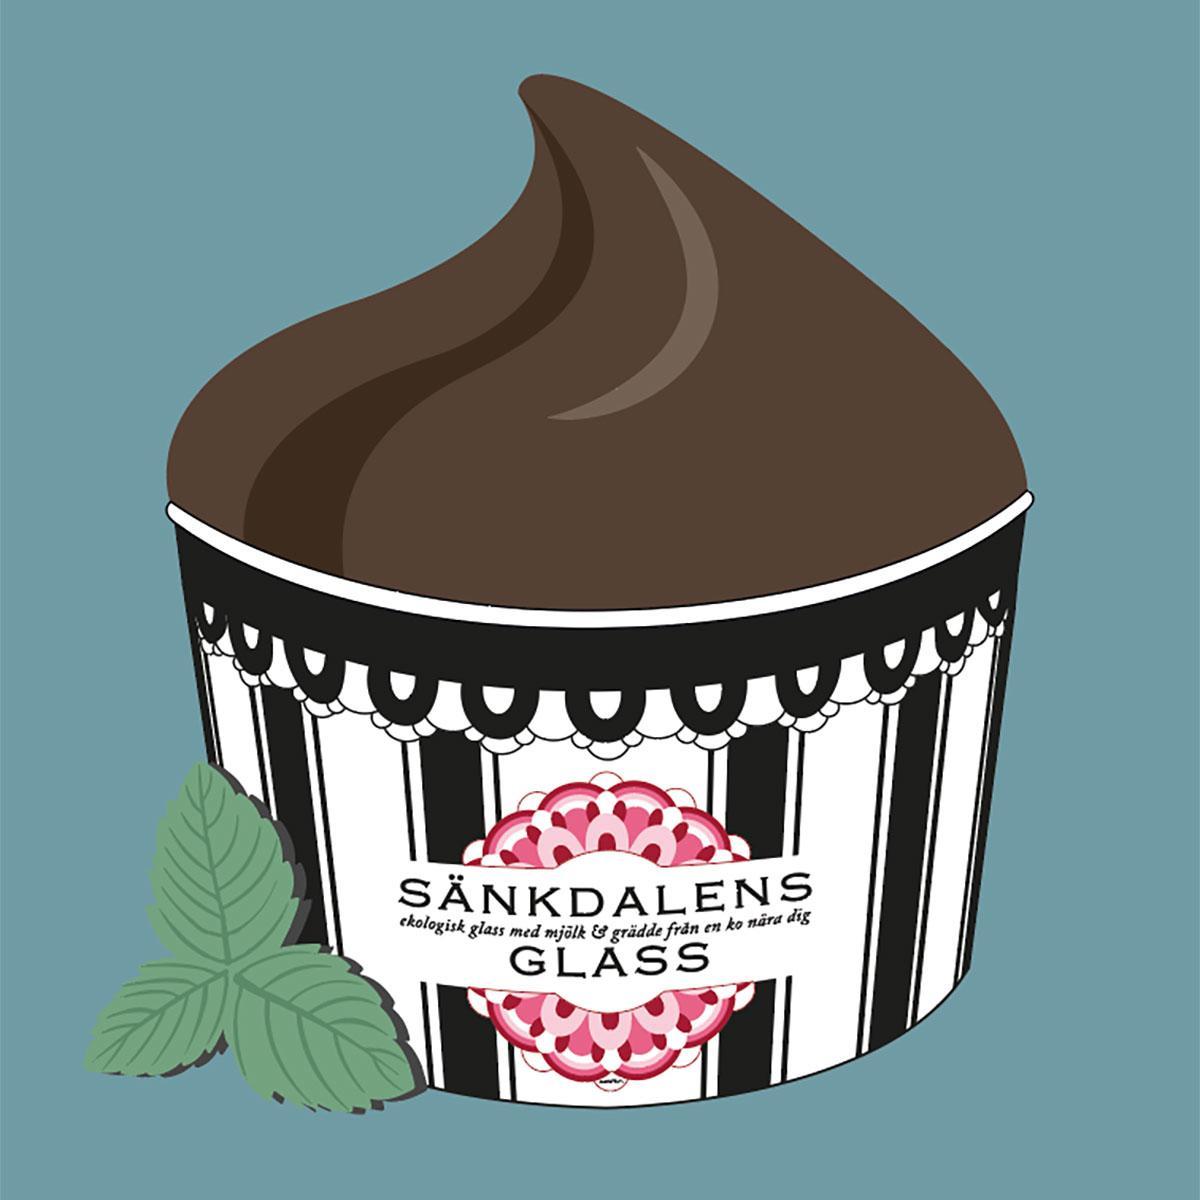 Mint chocolate ice cream Sänkdalens glass